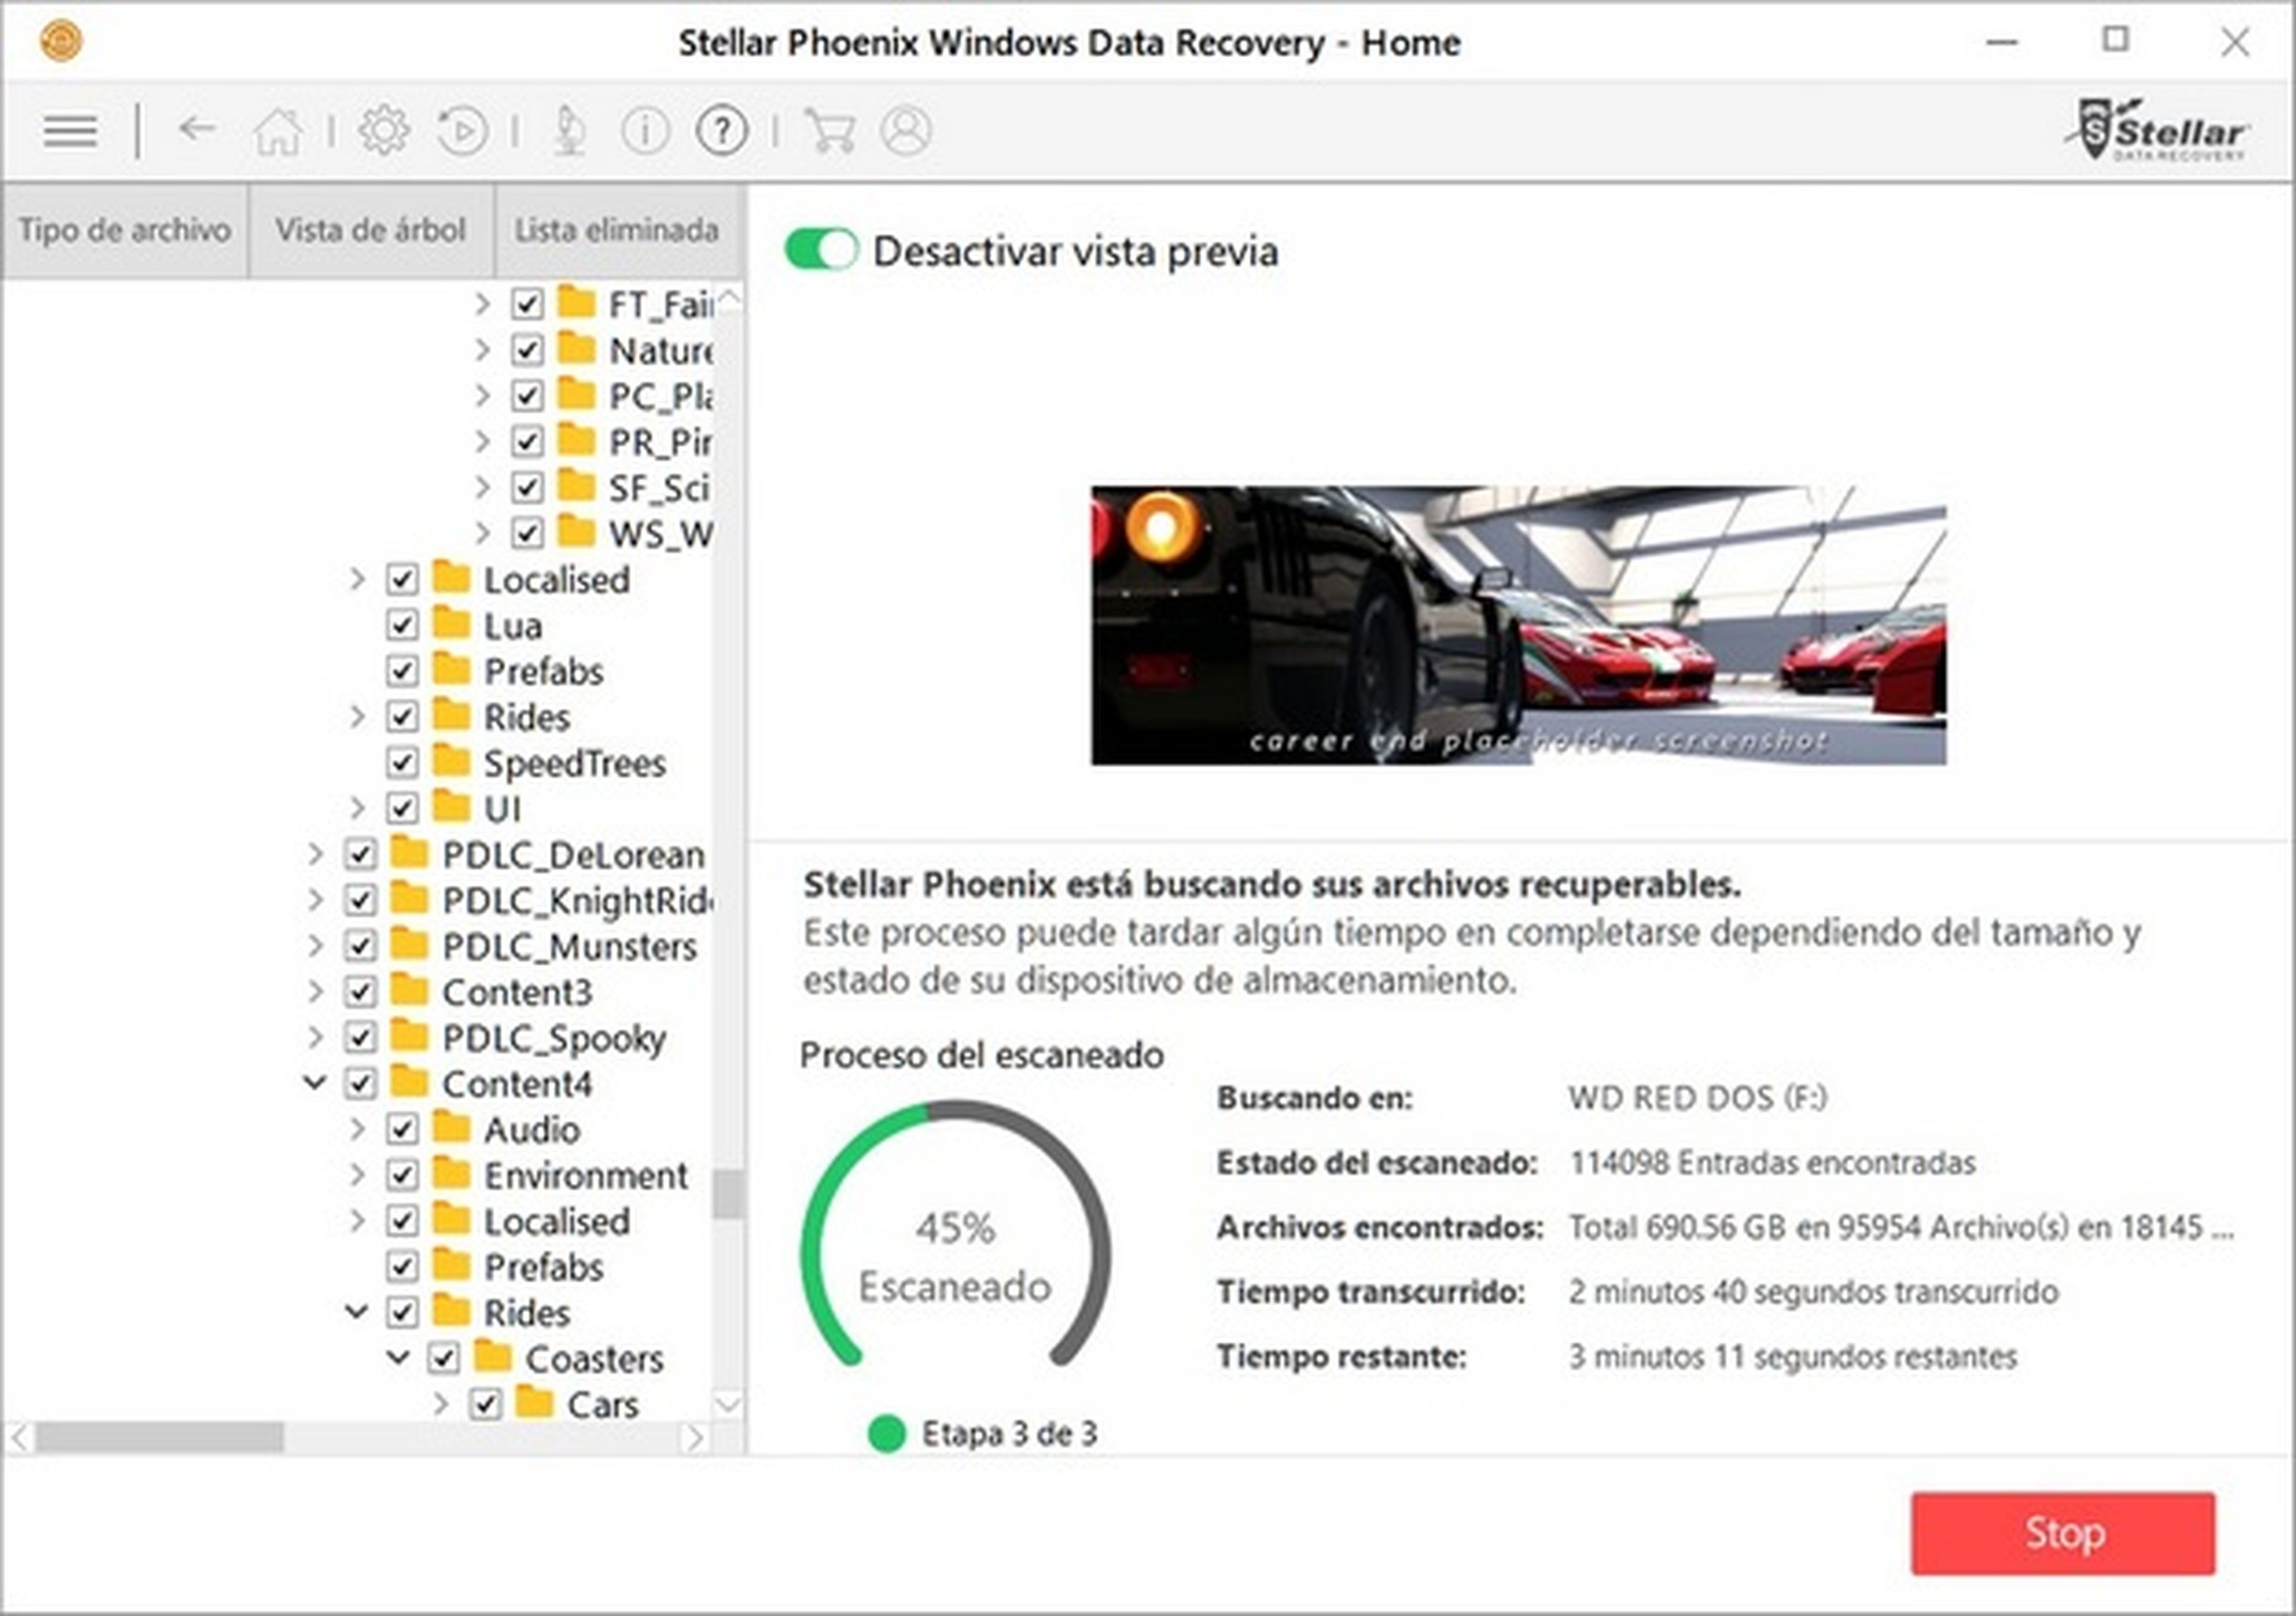 Stellar Phoenix Windows Data Recovery Home Version